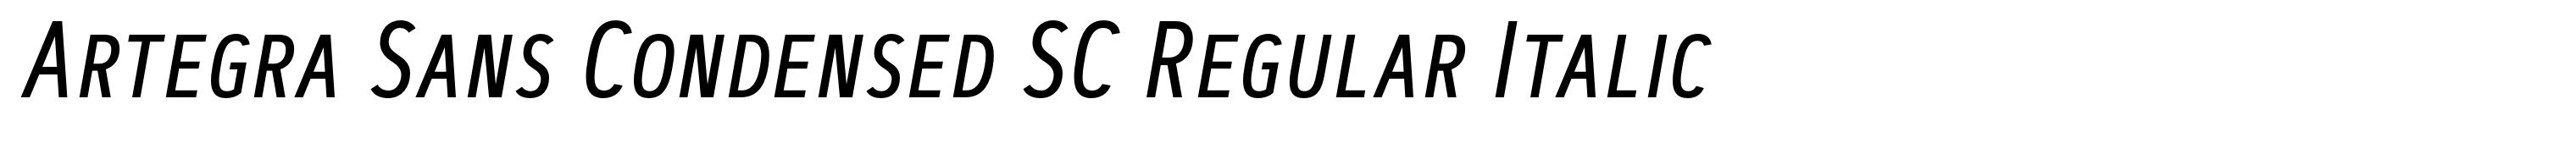 Artegra Sans Condensed SC Regular Italic